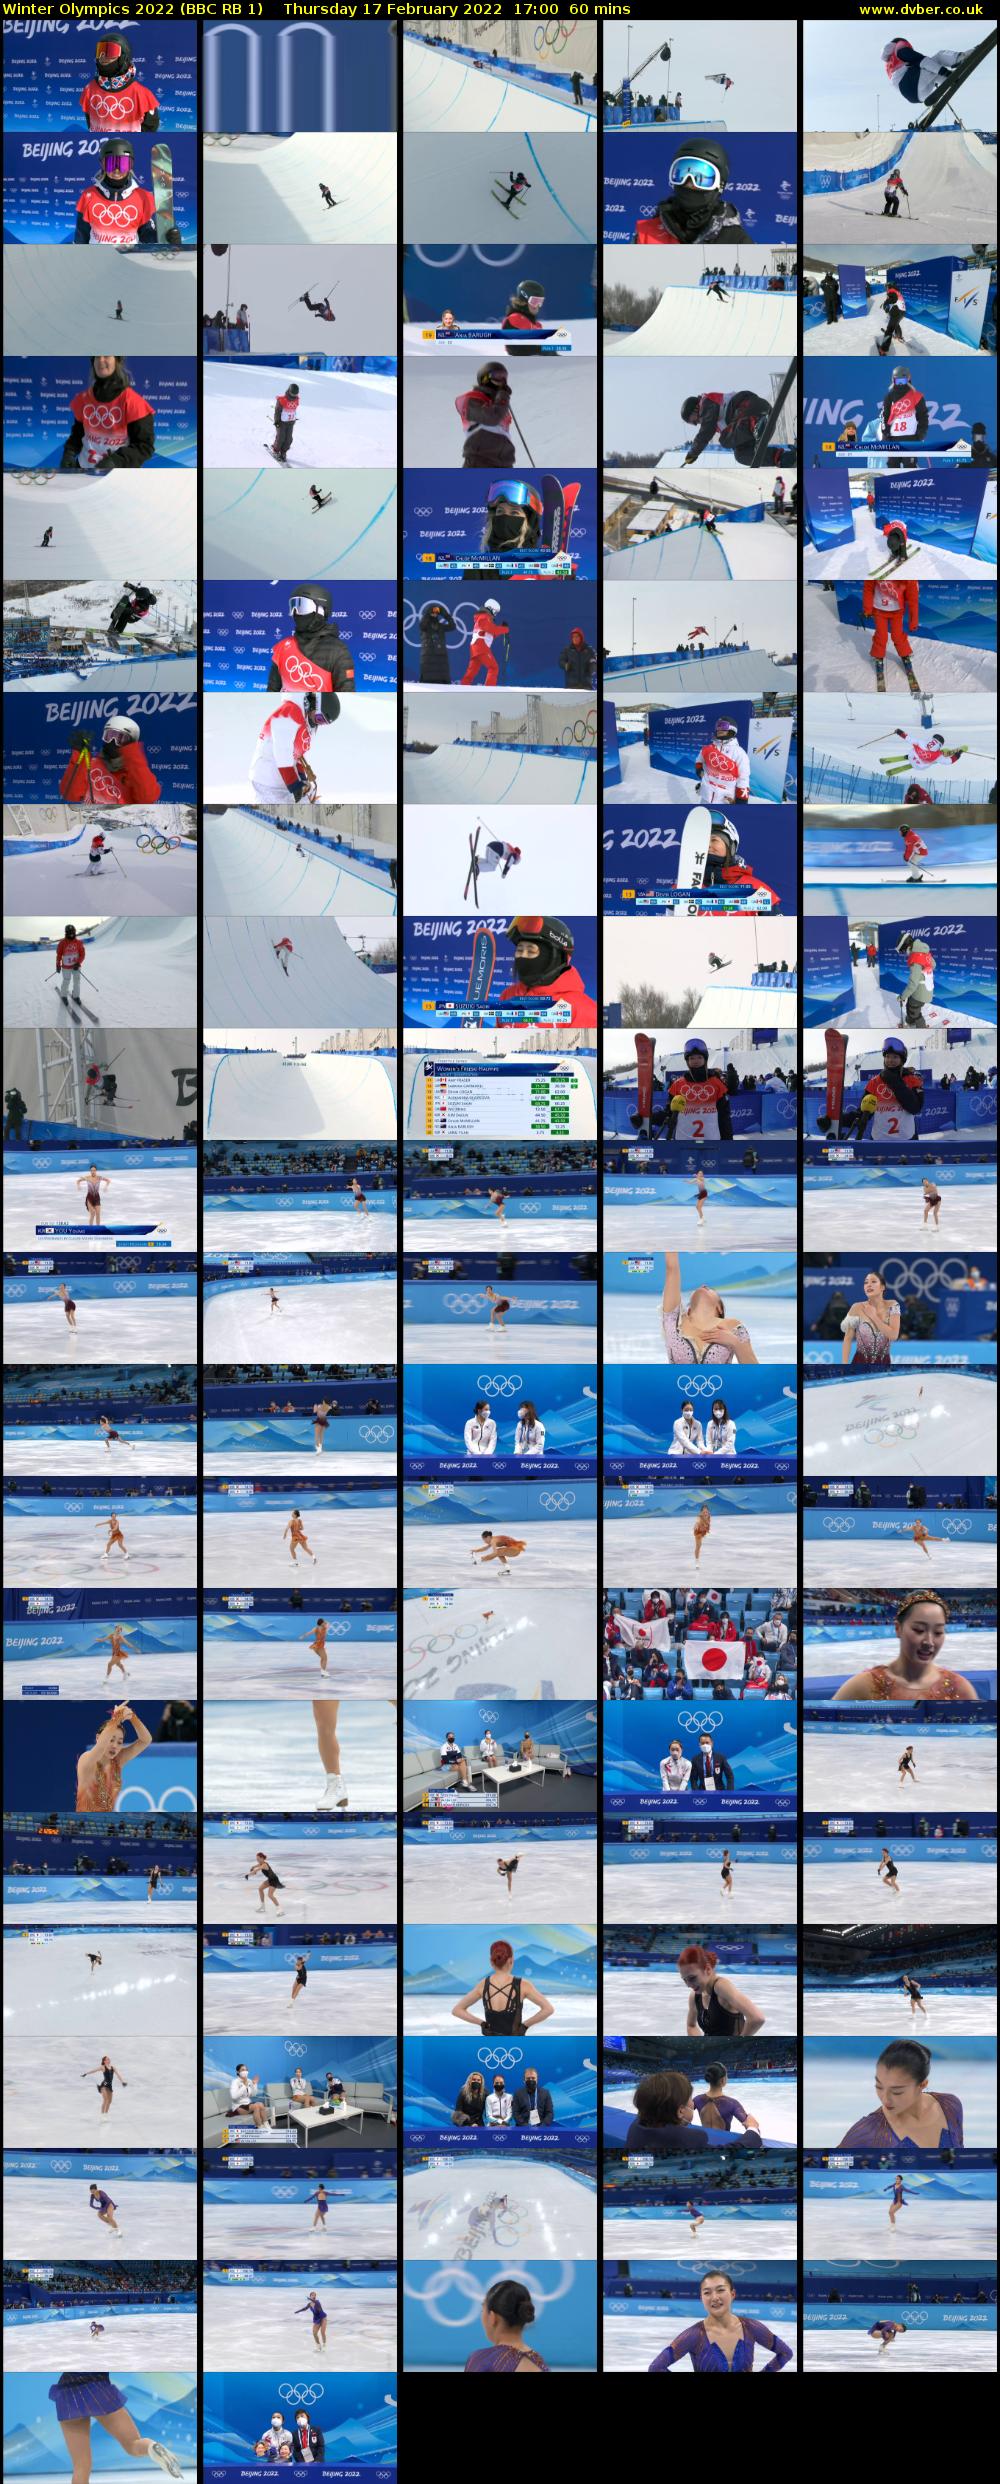 Winter Olympics 2022 (BBC RB 1) Thursday 17 February 2022 17:00 - 18:00